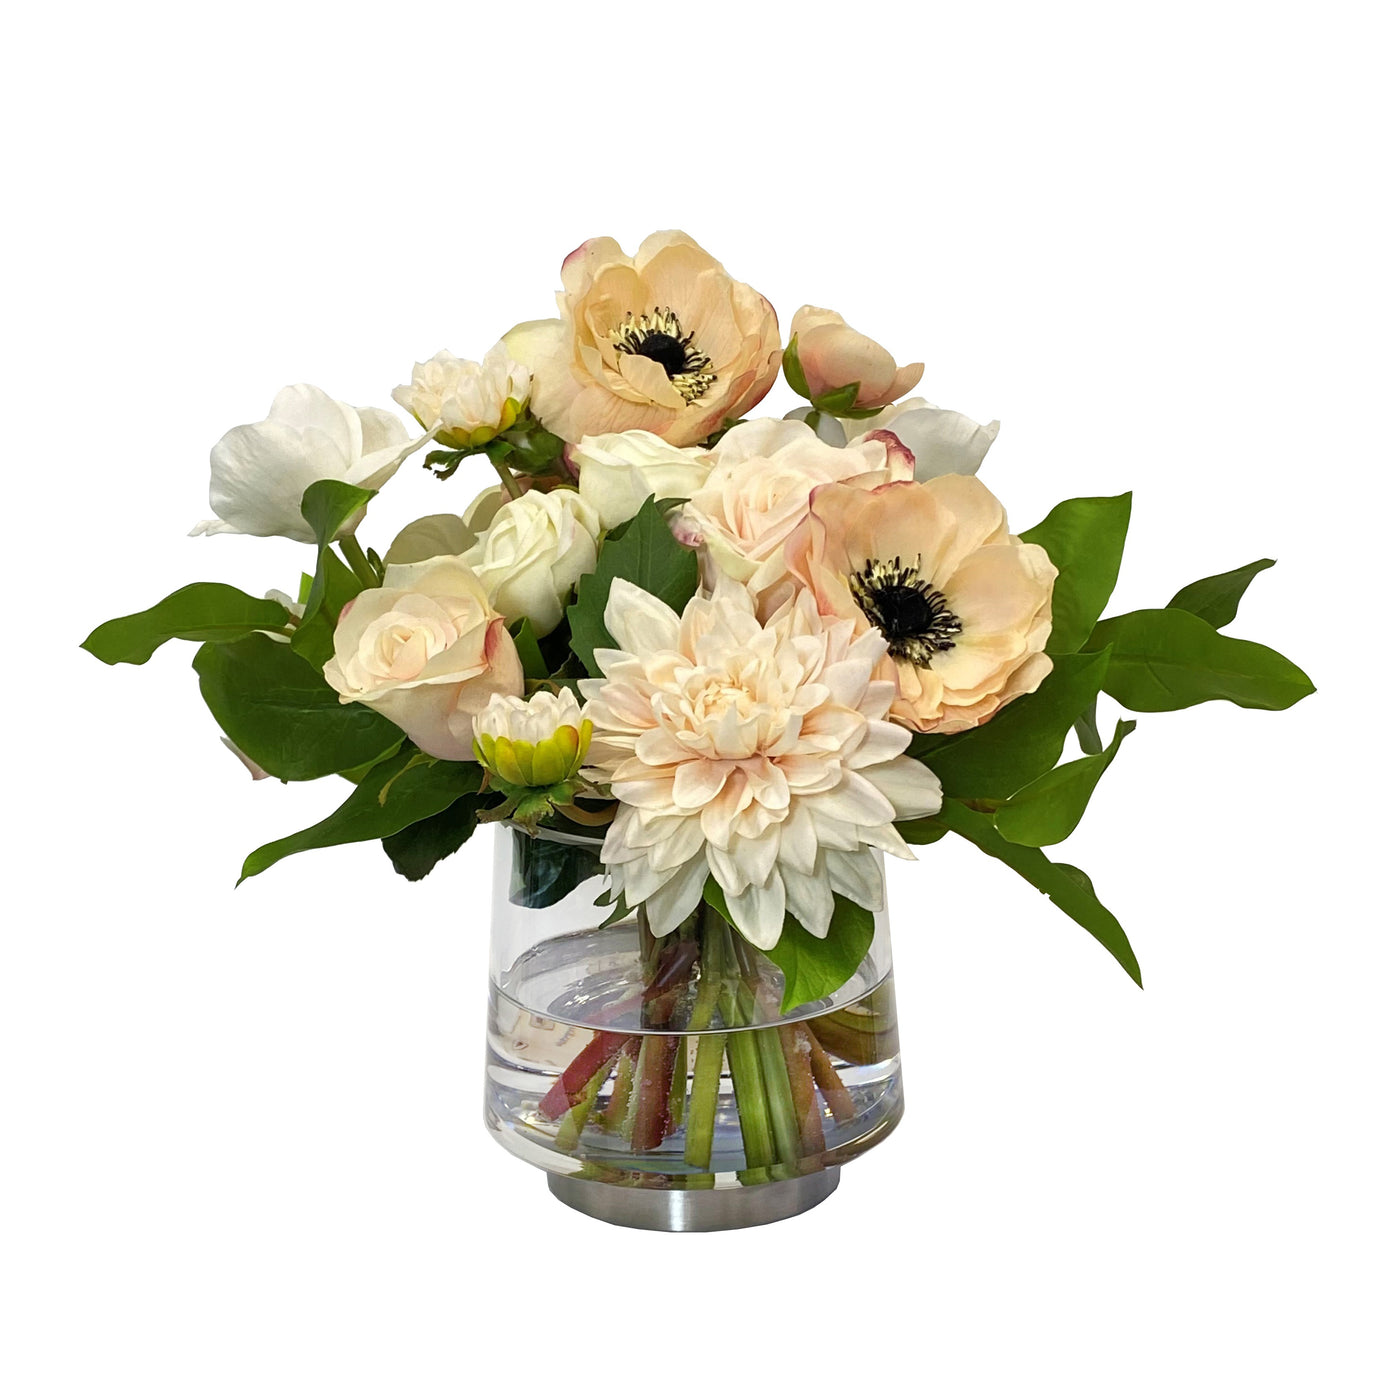 Real Touch luxury faux flower arrangement in blush neutrals